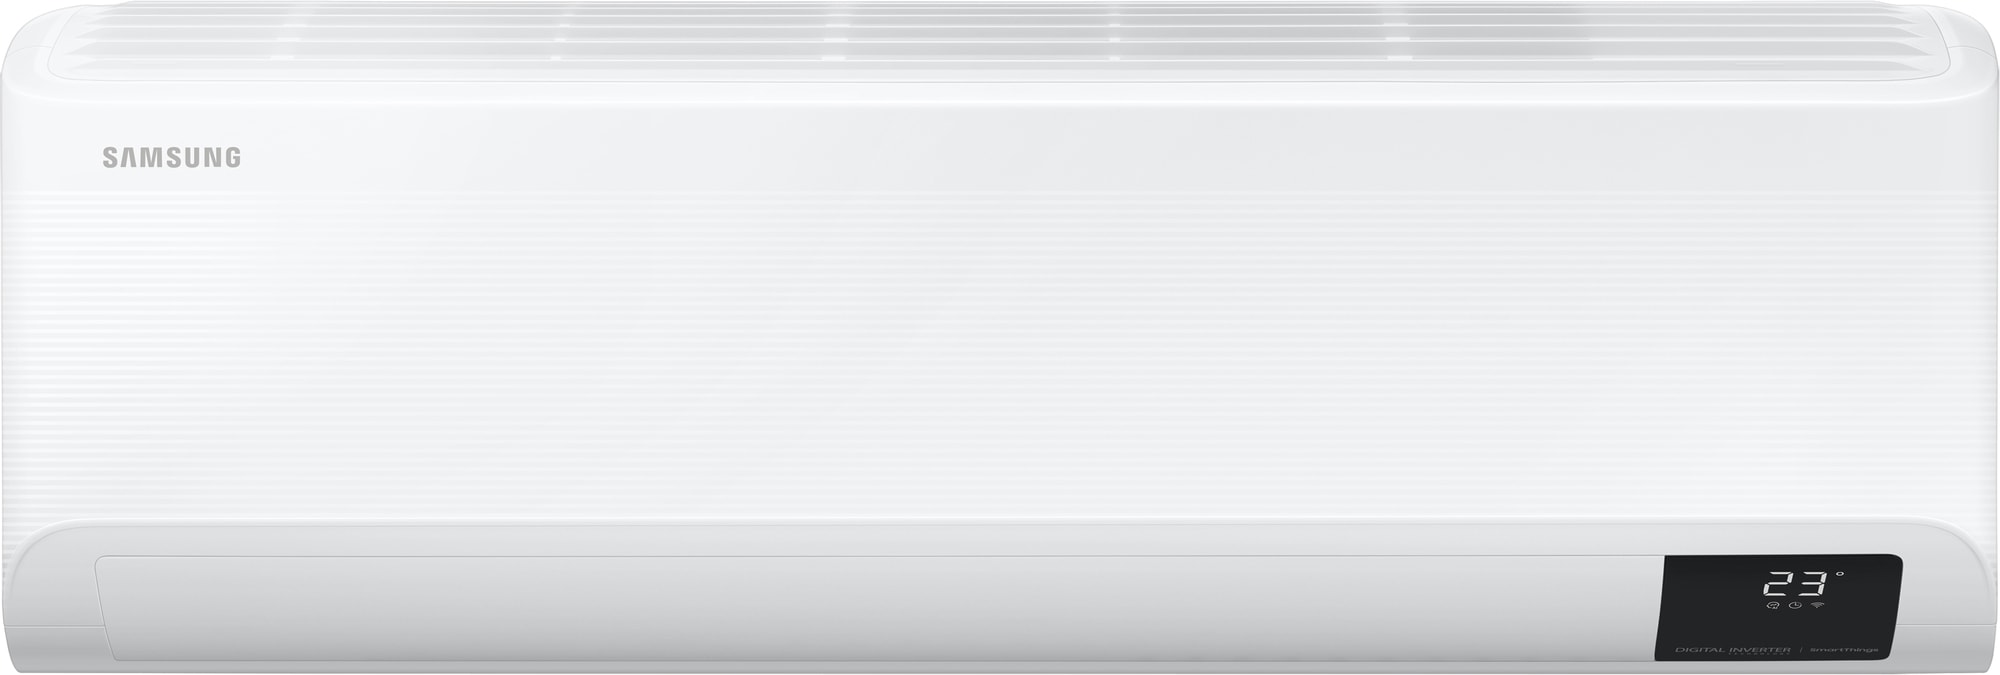 Samsung Nordic Home Premium 25 varmepumpe (7188888141008)